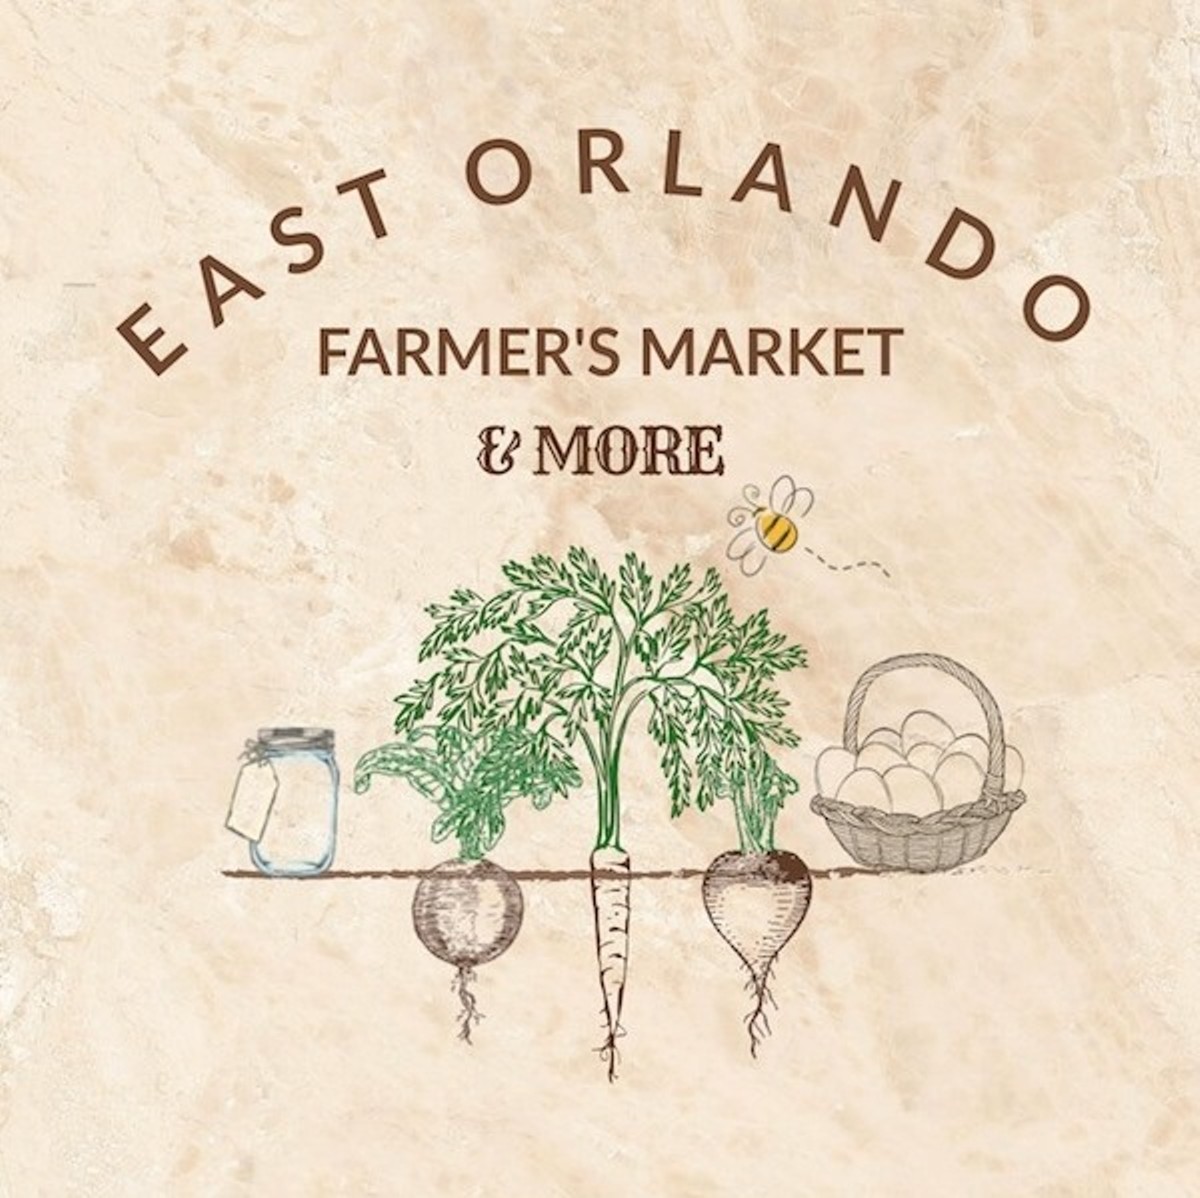 East Orlando Farmer's Market & More